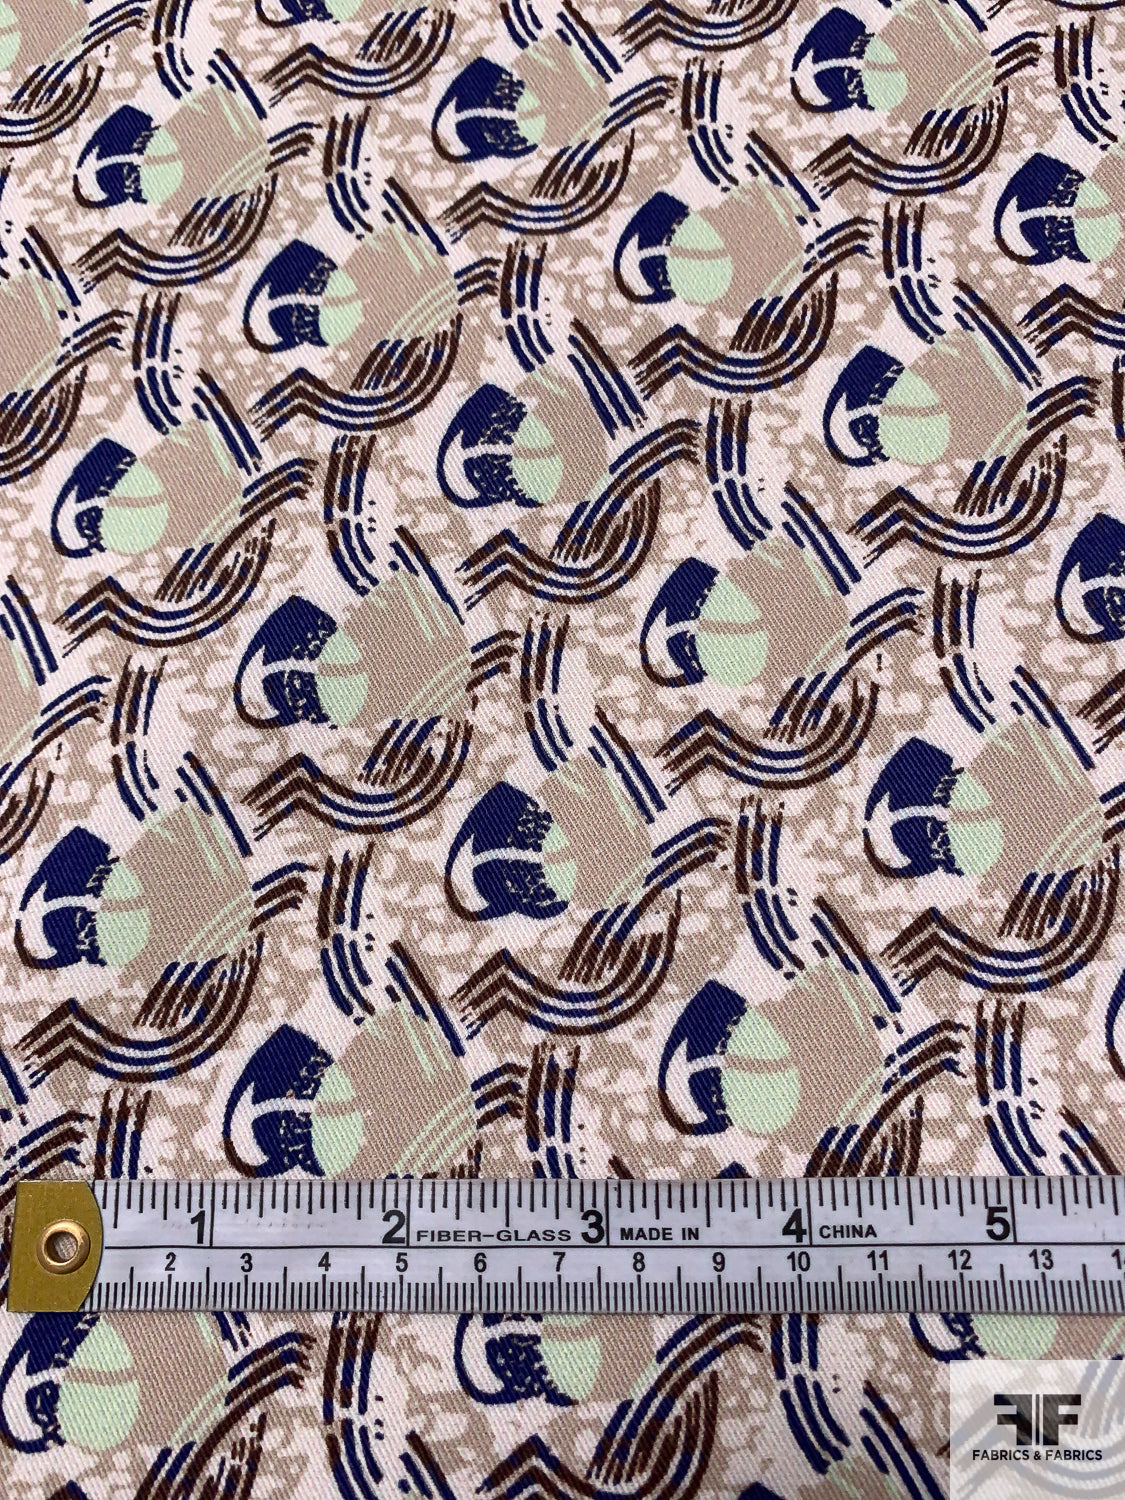 Locked Hearts Printed Stretch Cotton Twill - Khaki / Navy Blue / Seafoam / Brown